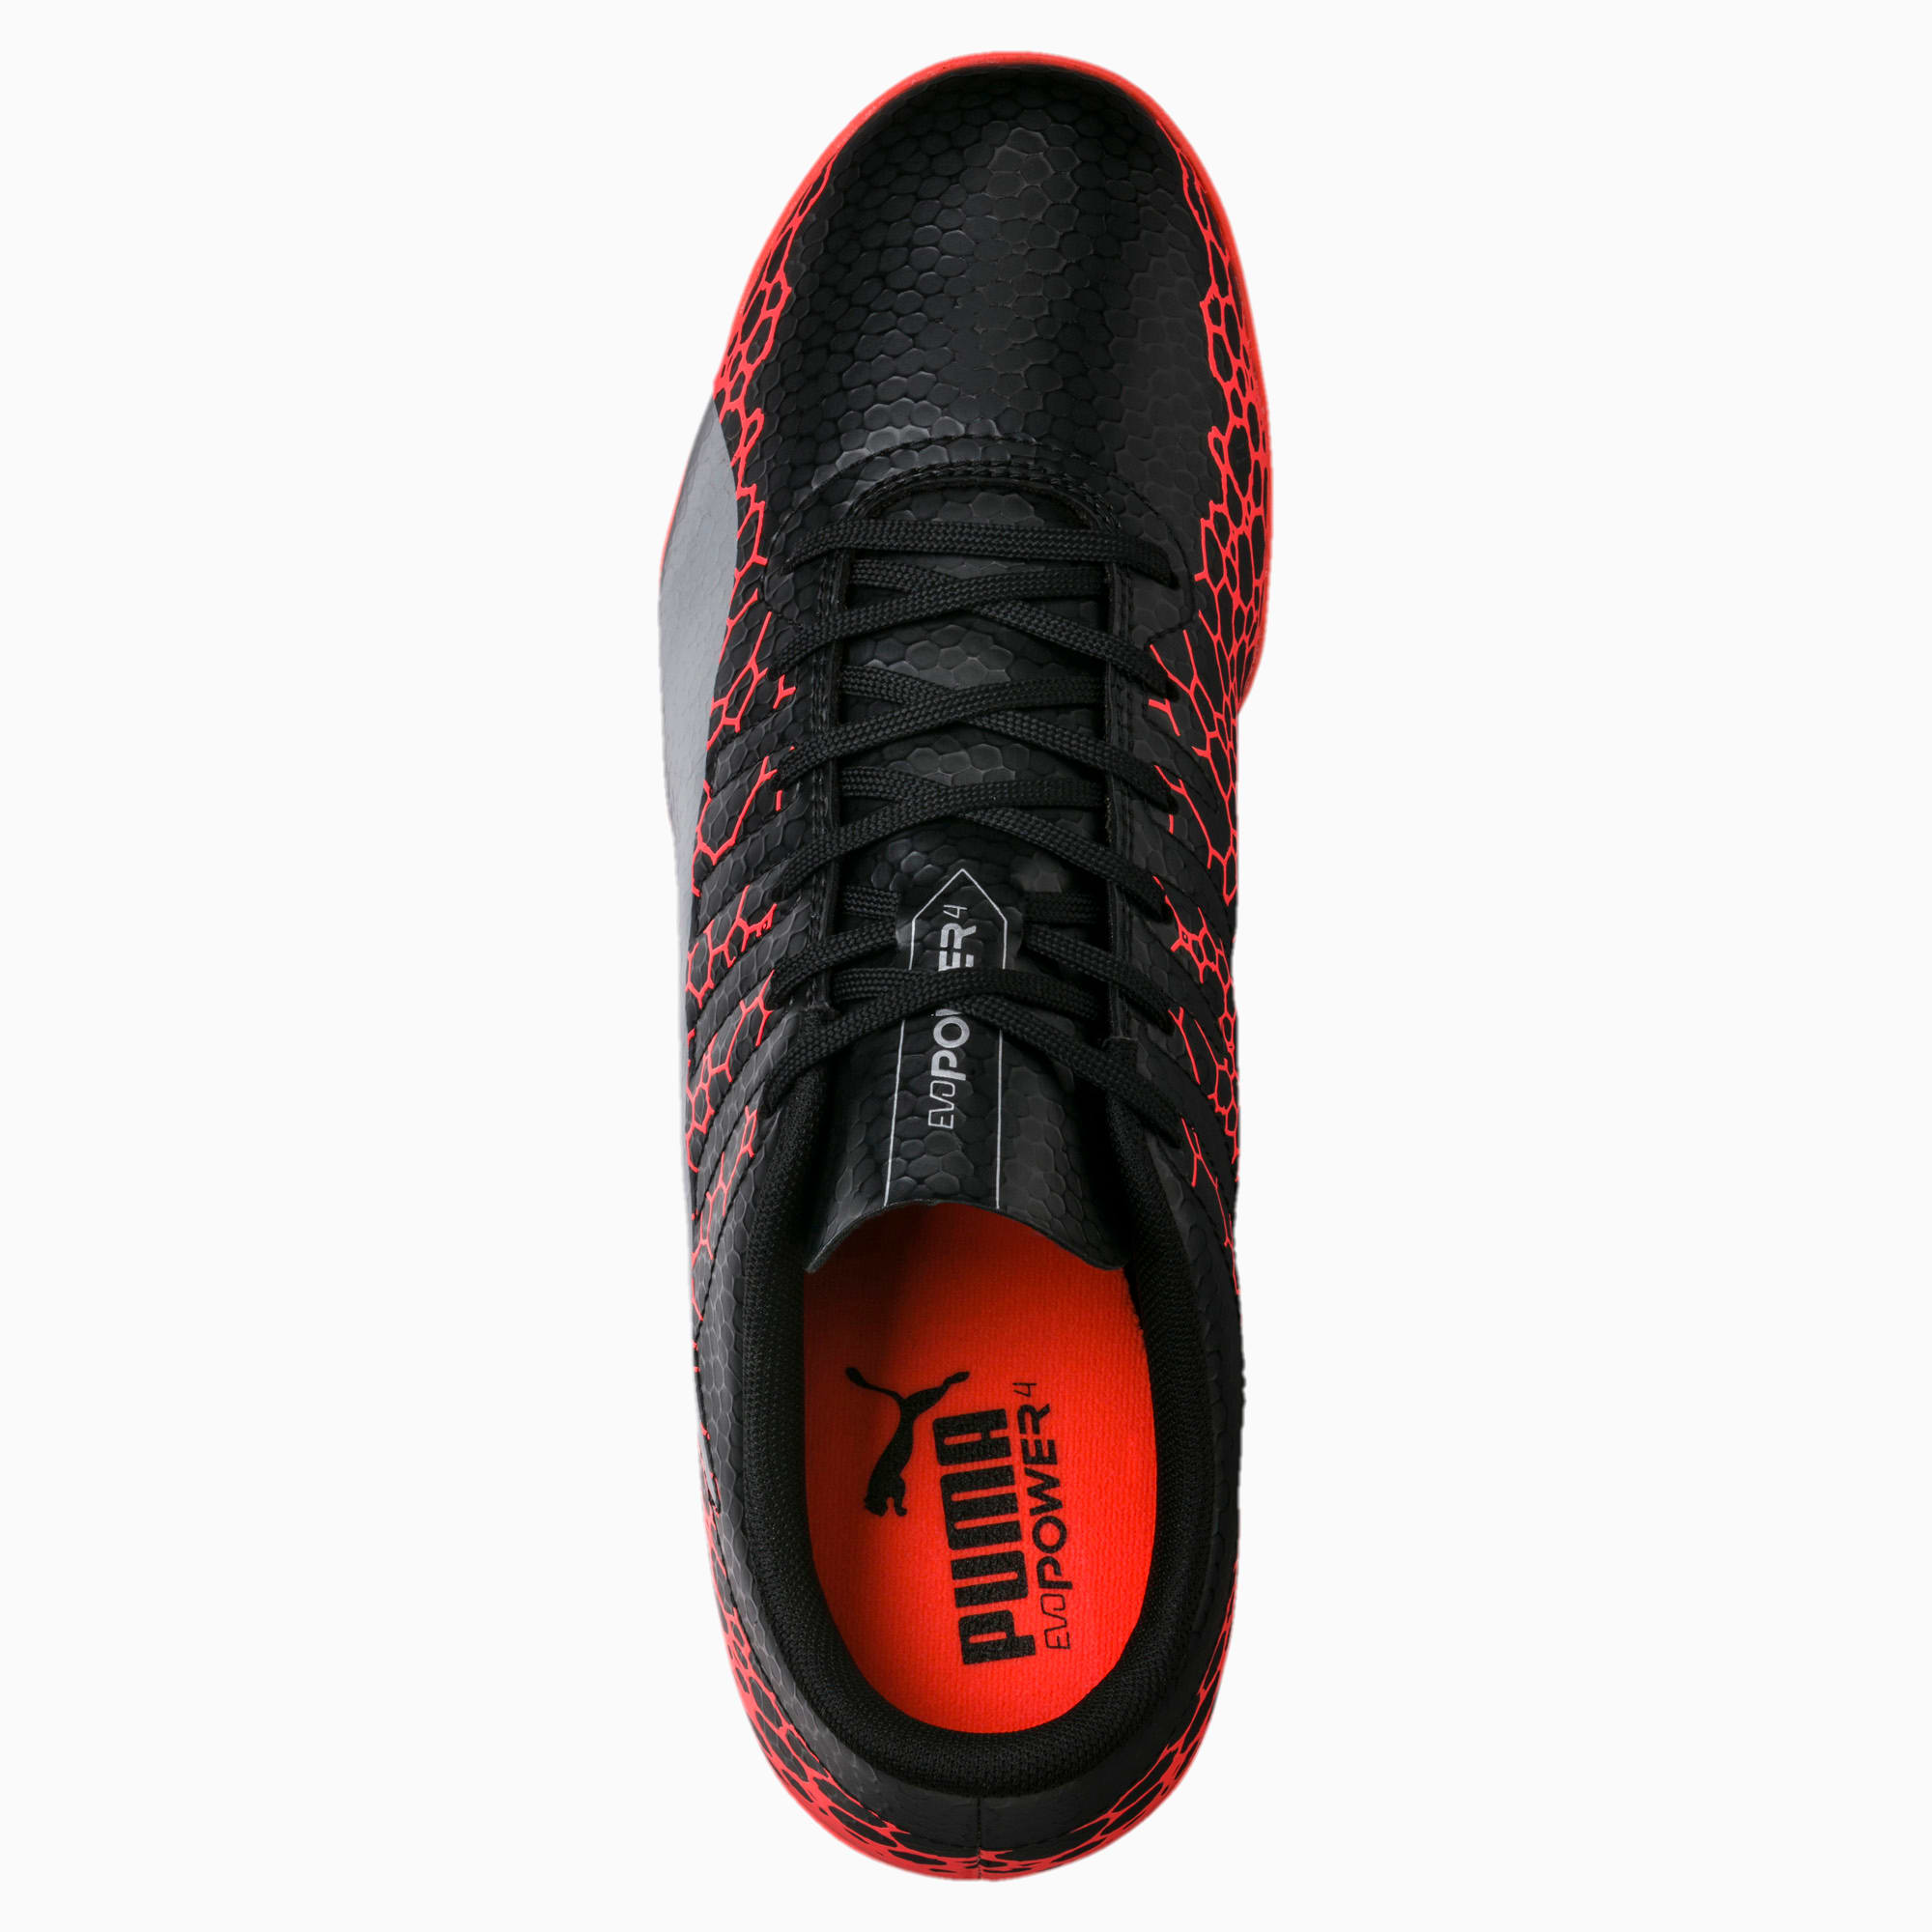 puma men's evopower 4 indoor soccer shoe